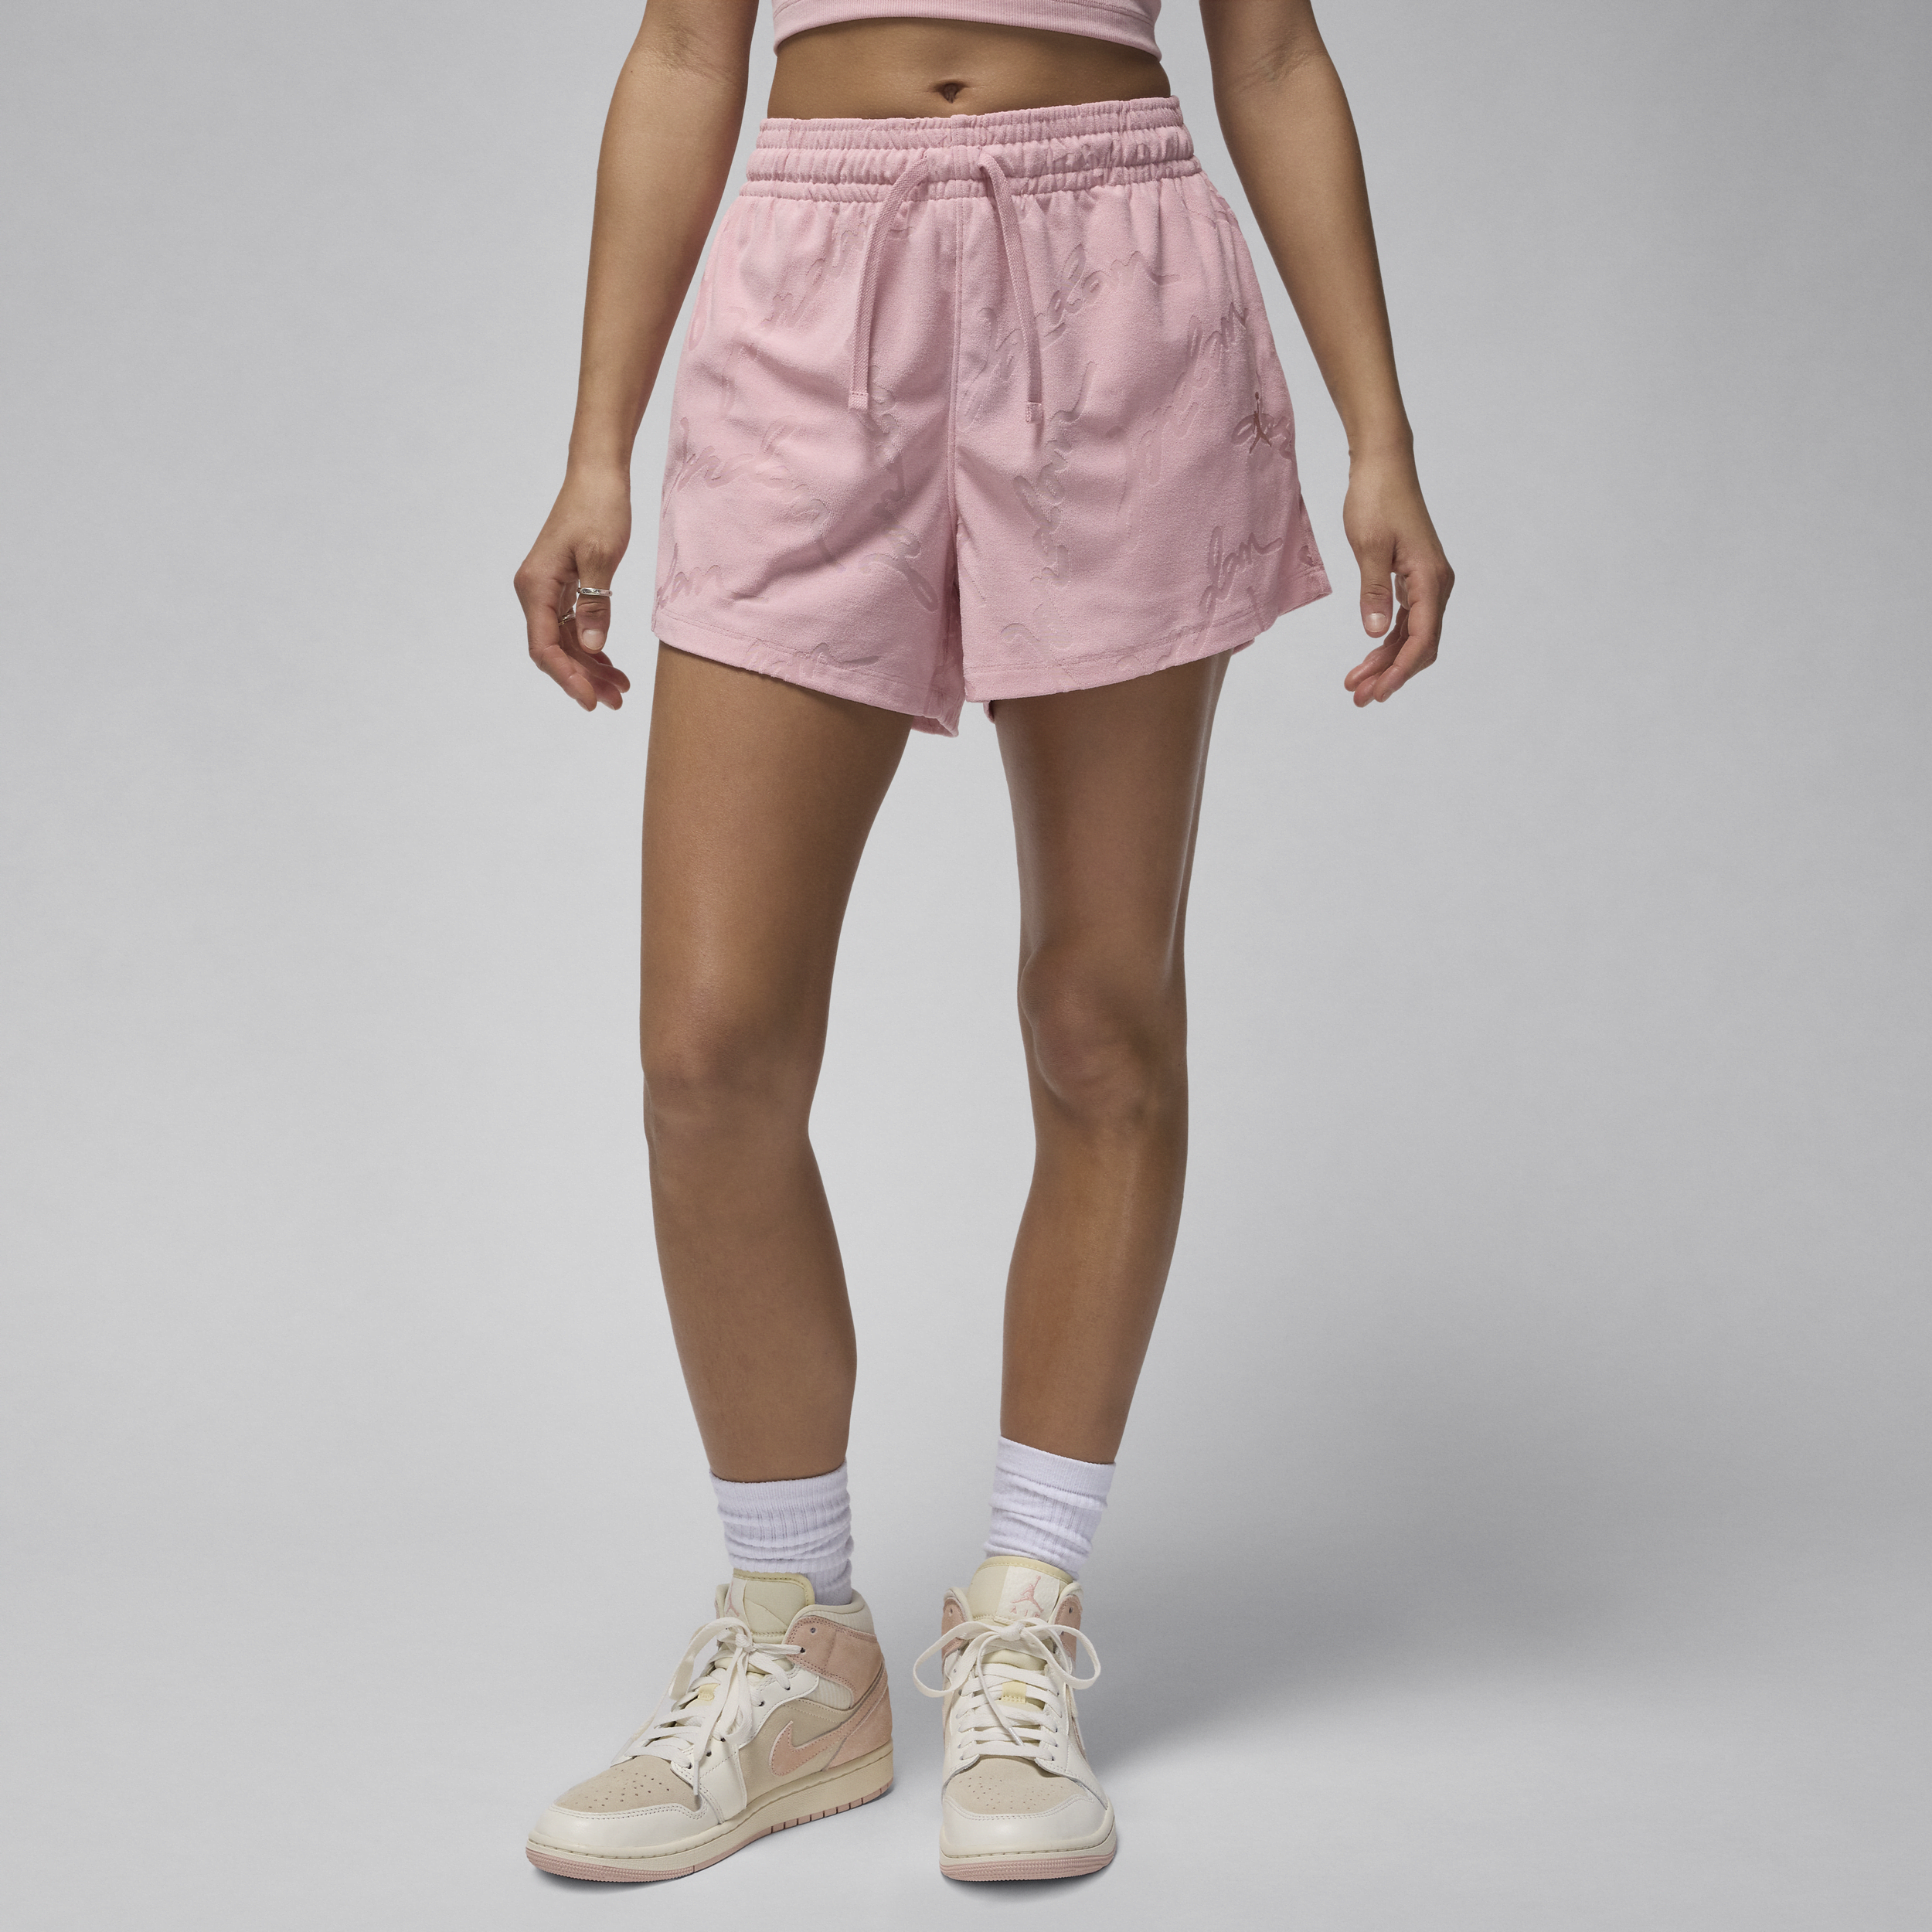 Jordan Pantalón corto de tejido Knit - Mujer - Rosa